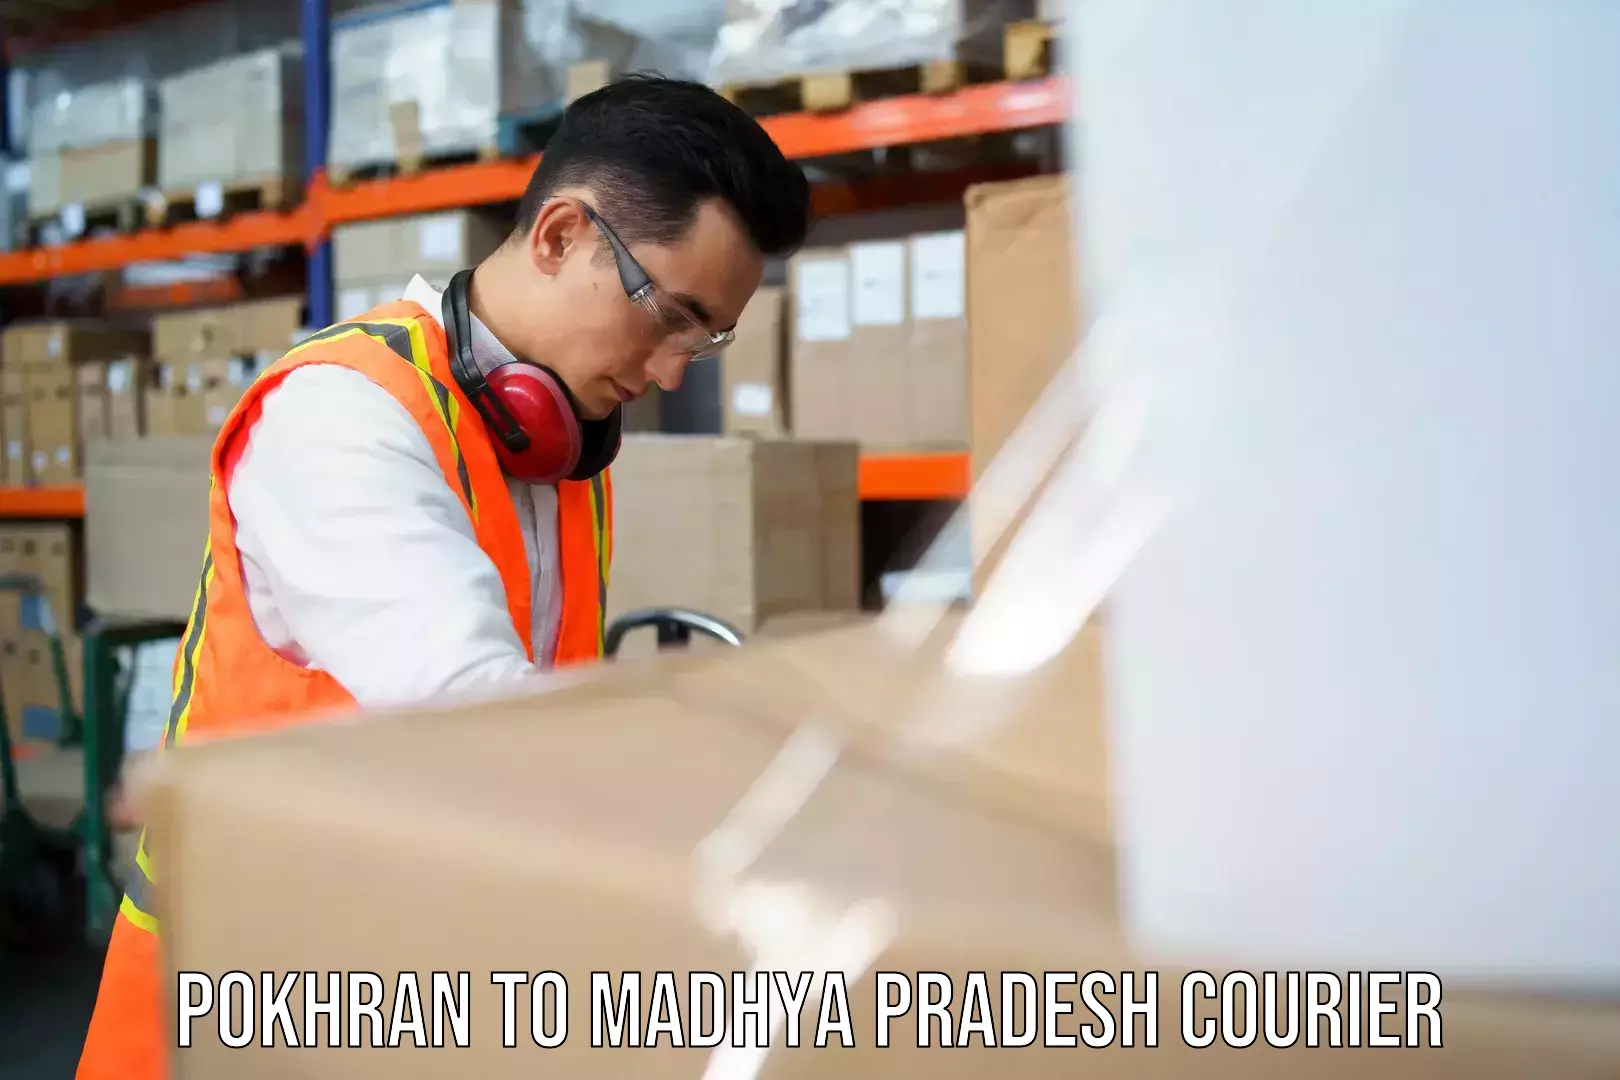 Courier service innovation Pokhran to Vijayraghavgarh